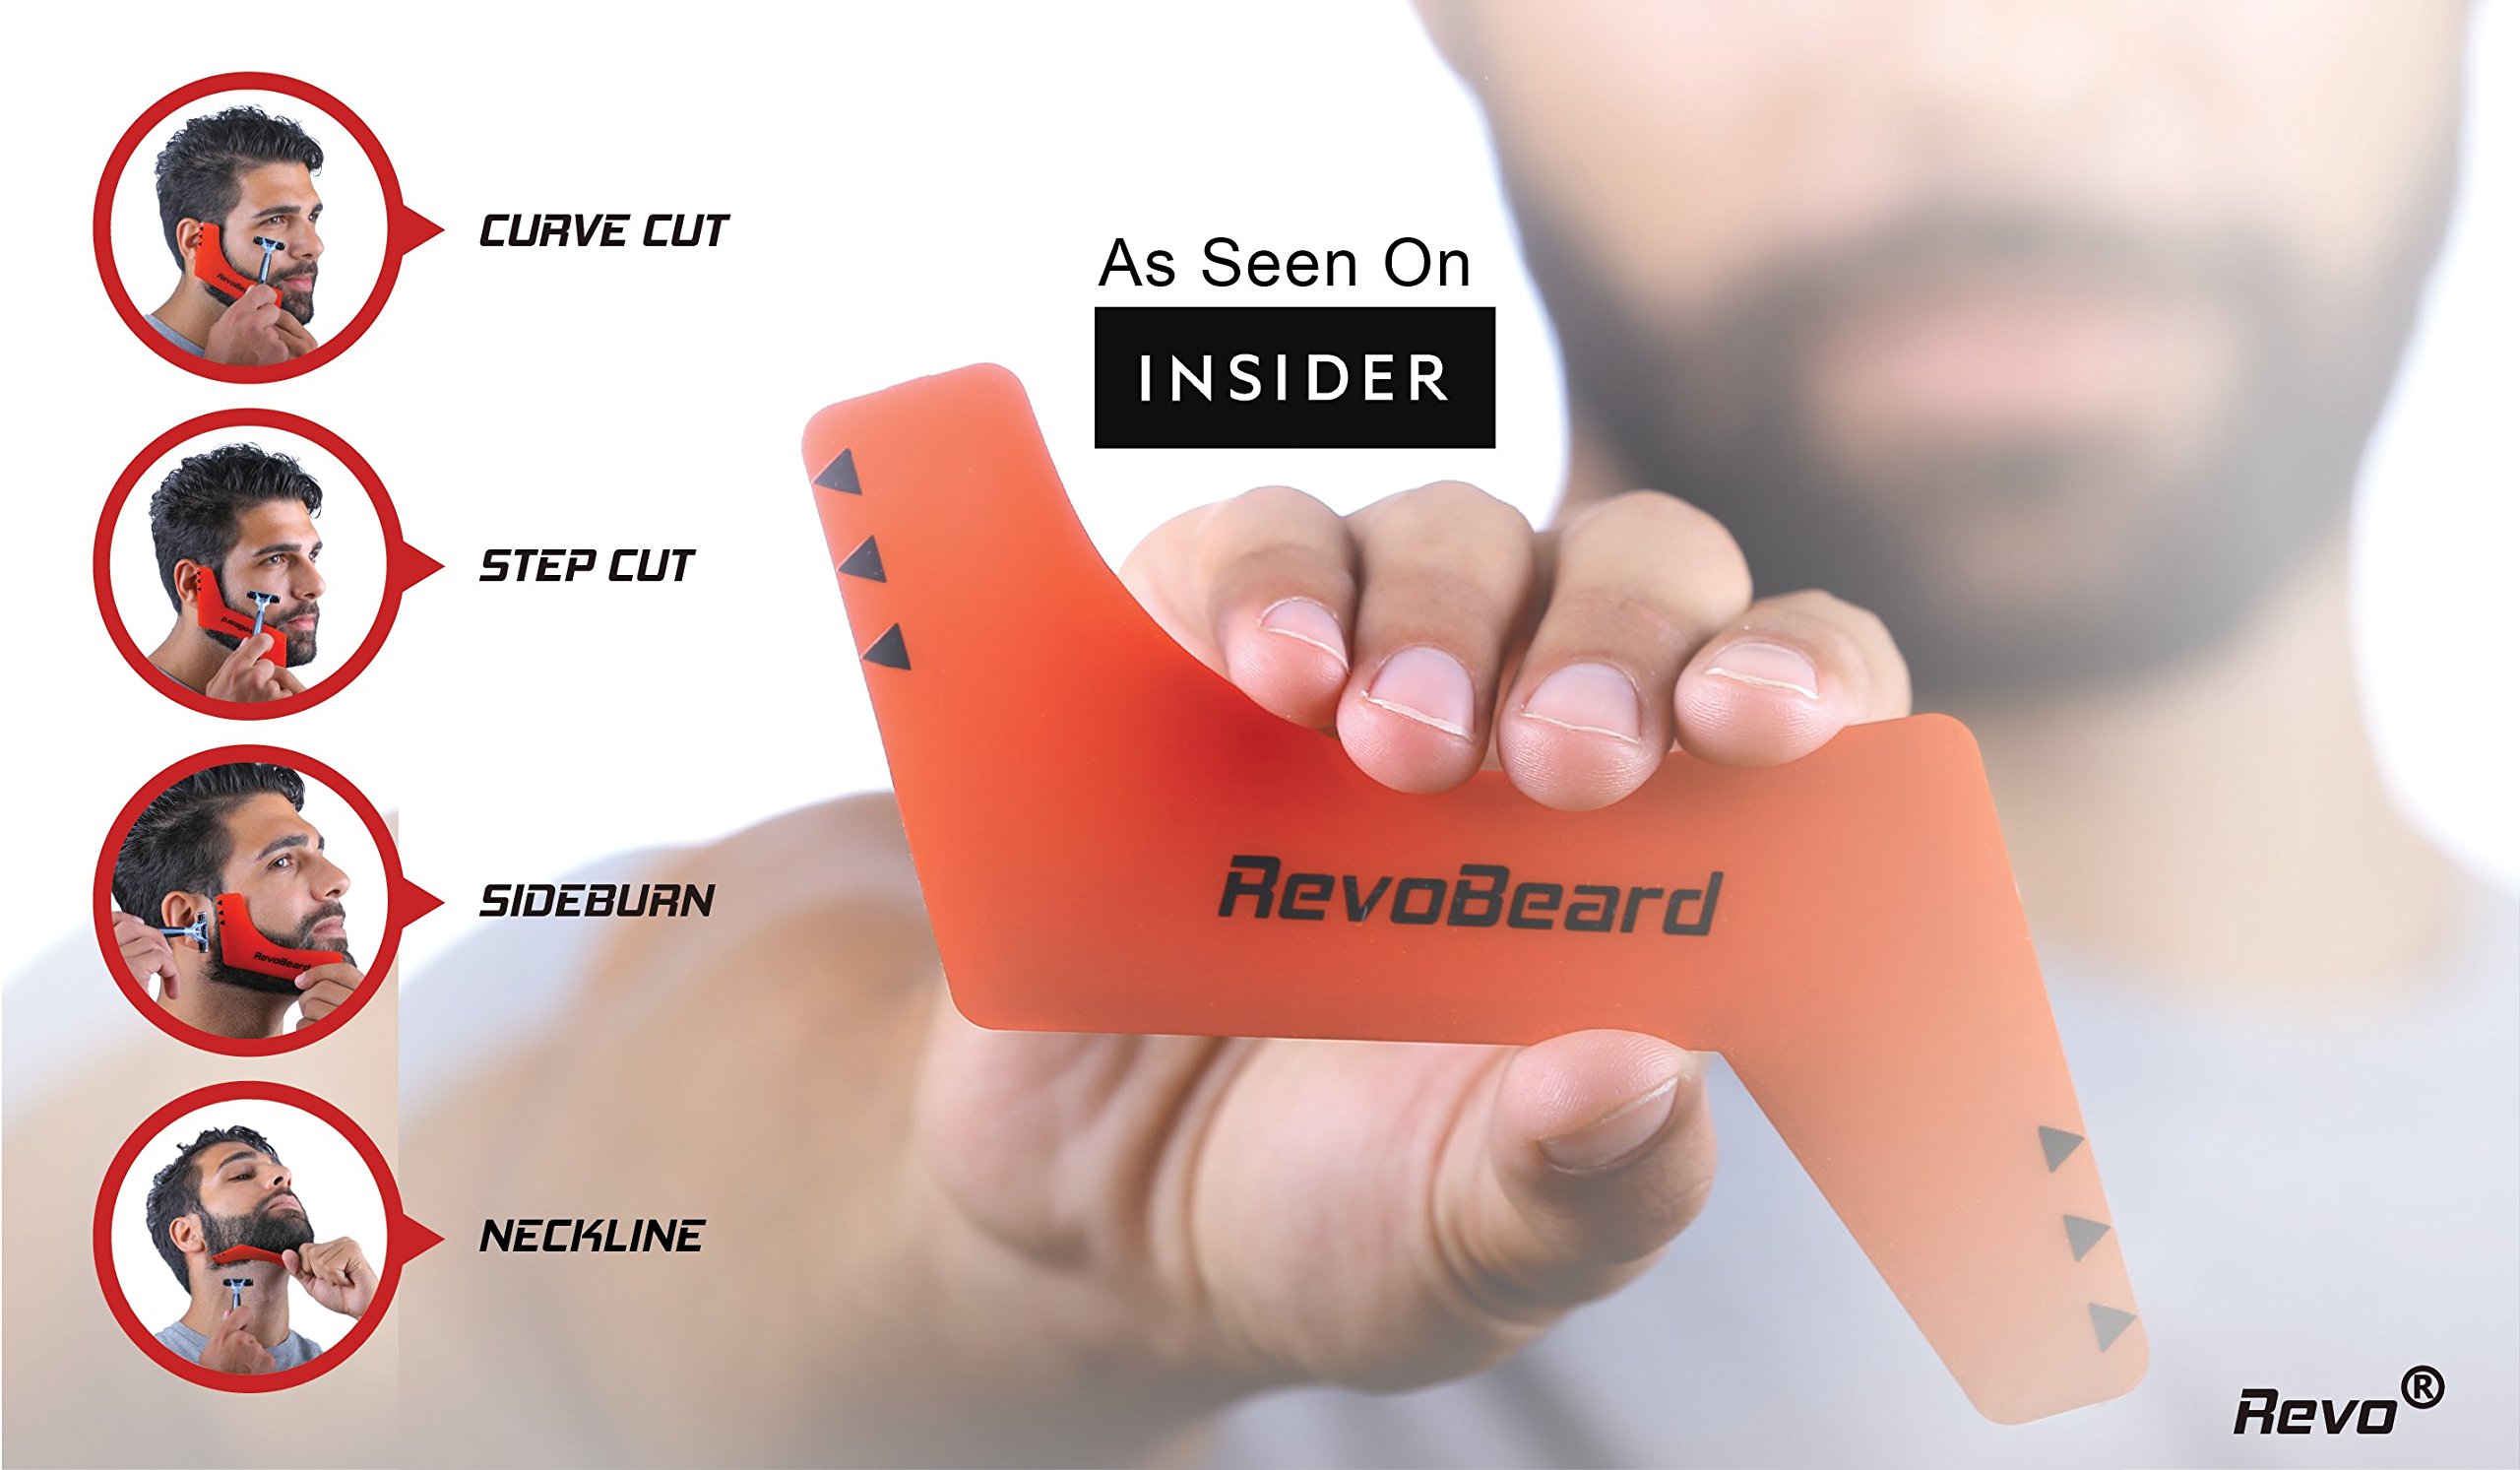 RevoBeard Revo Haircut Kit - Beard, Hair, Goatee, and Neckline Shaving Template Guide - Perfect Hairline Lineup and Beard Shaping Tool - H